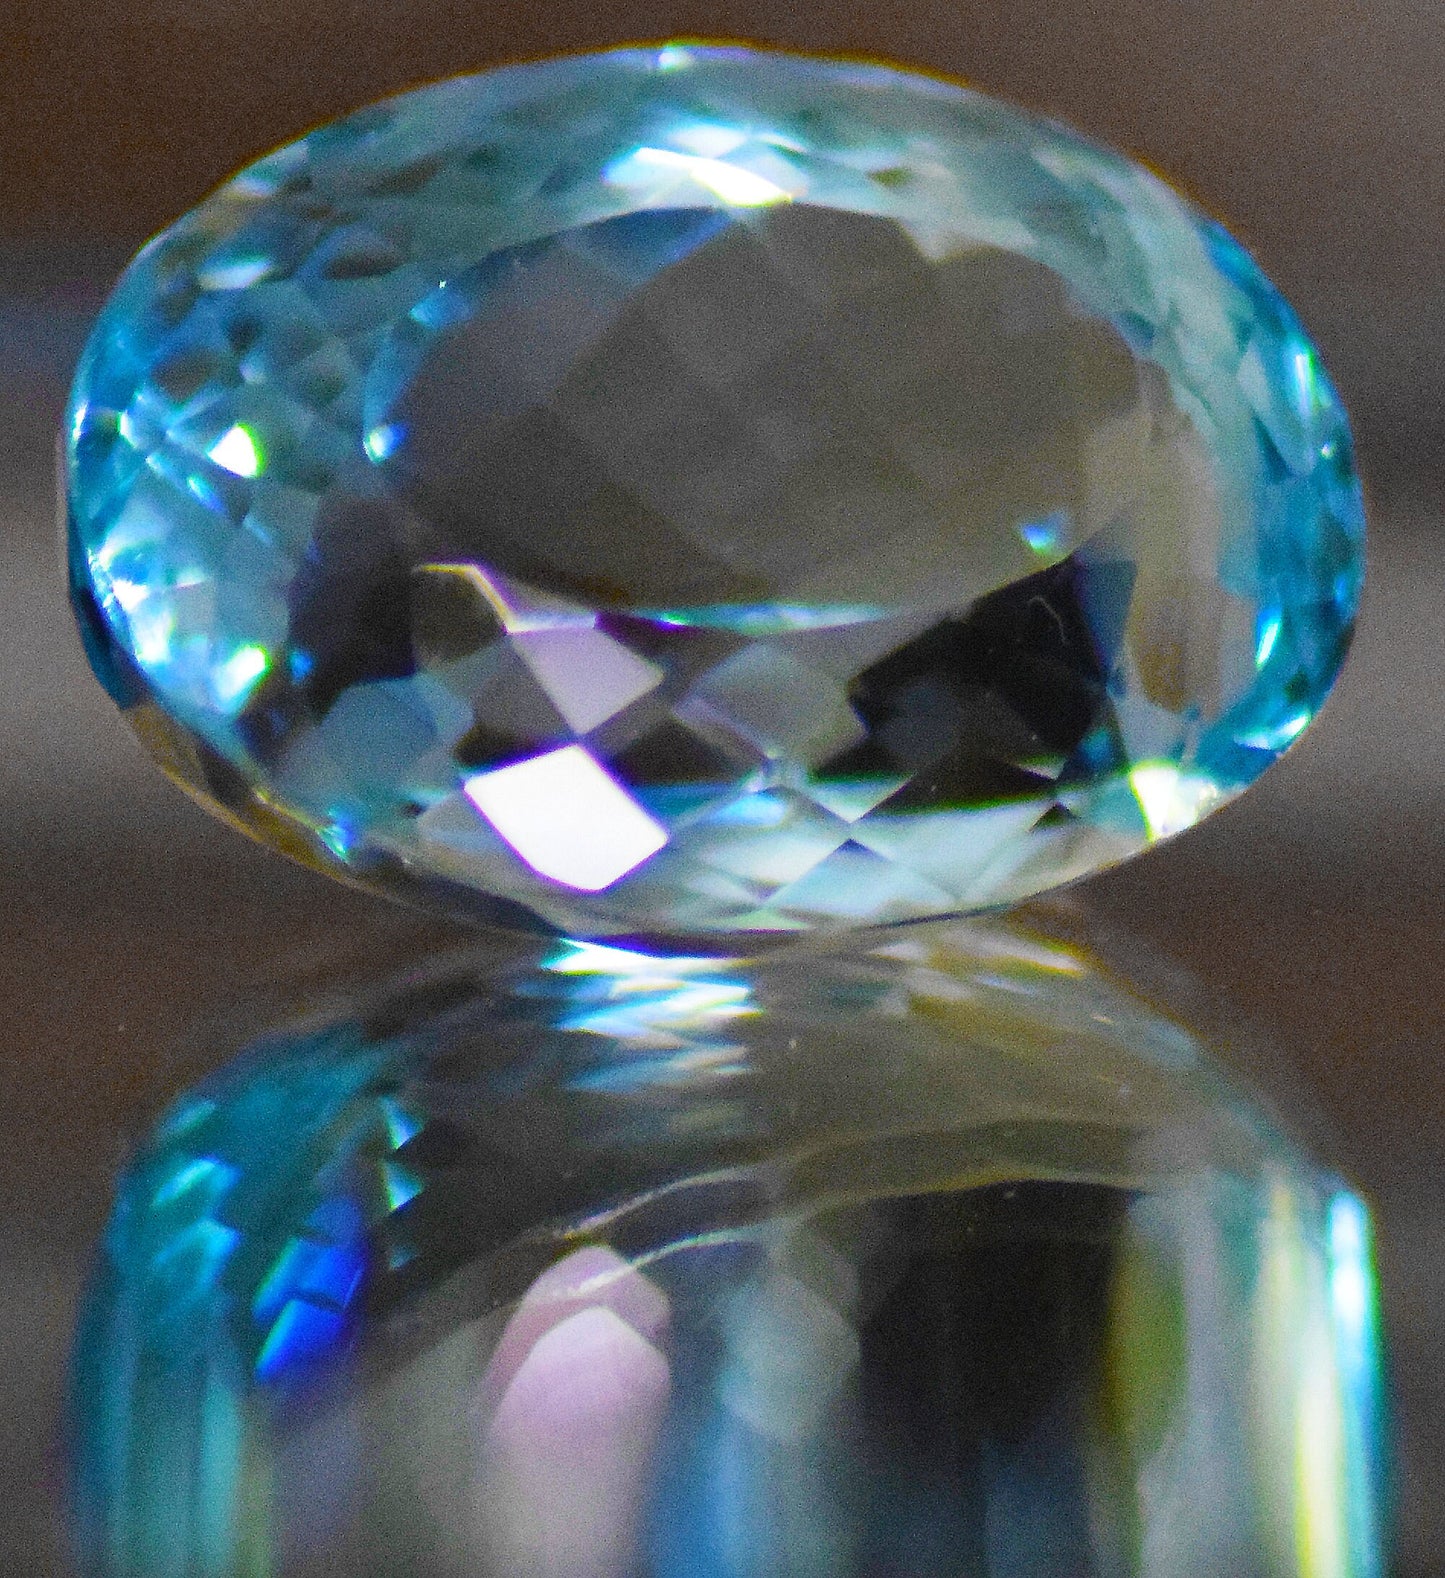 ENORMOUS 15.97 carat, deep blue natural, unheated, Brazilian Aquamarine gem!